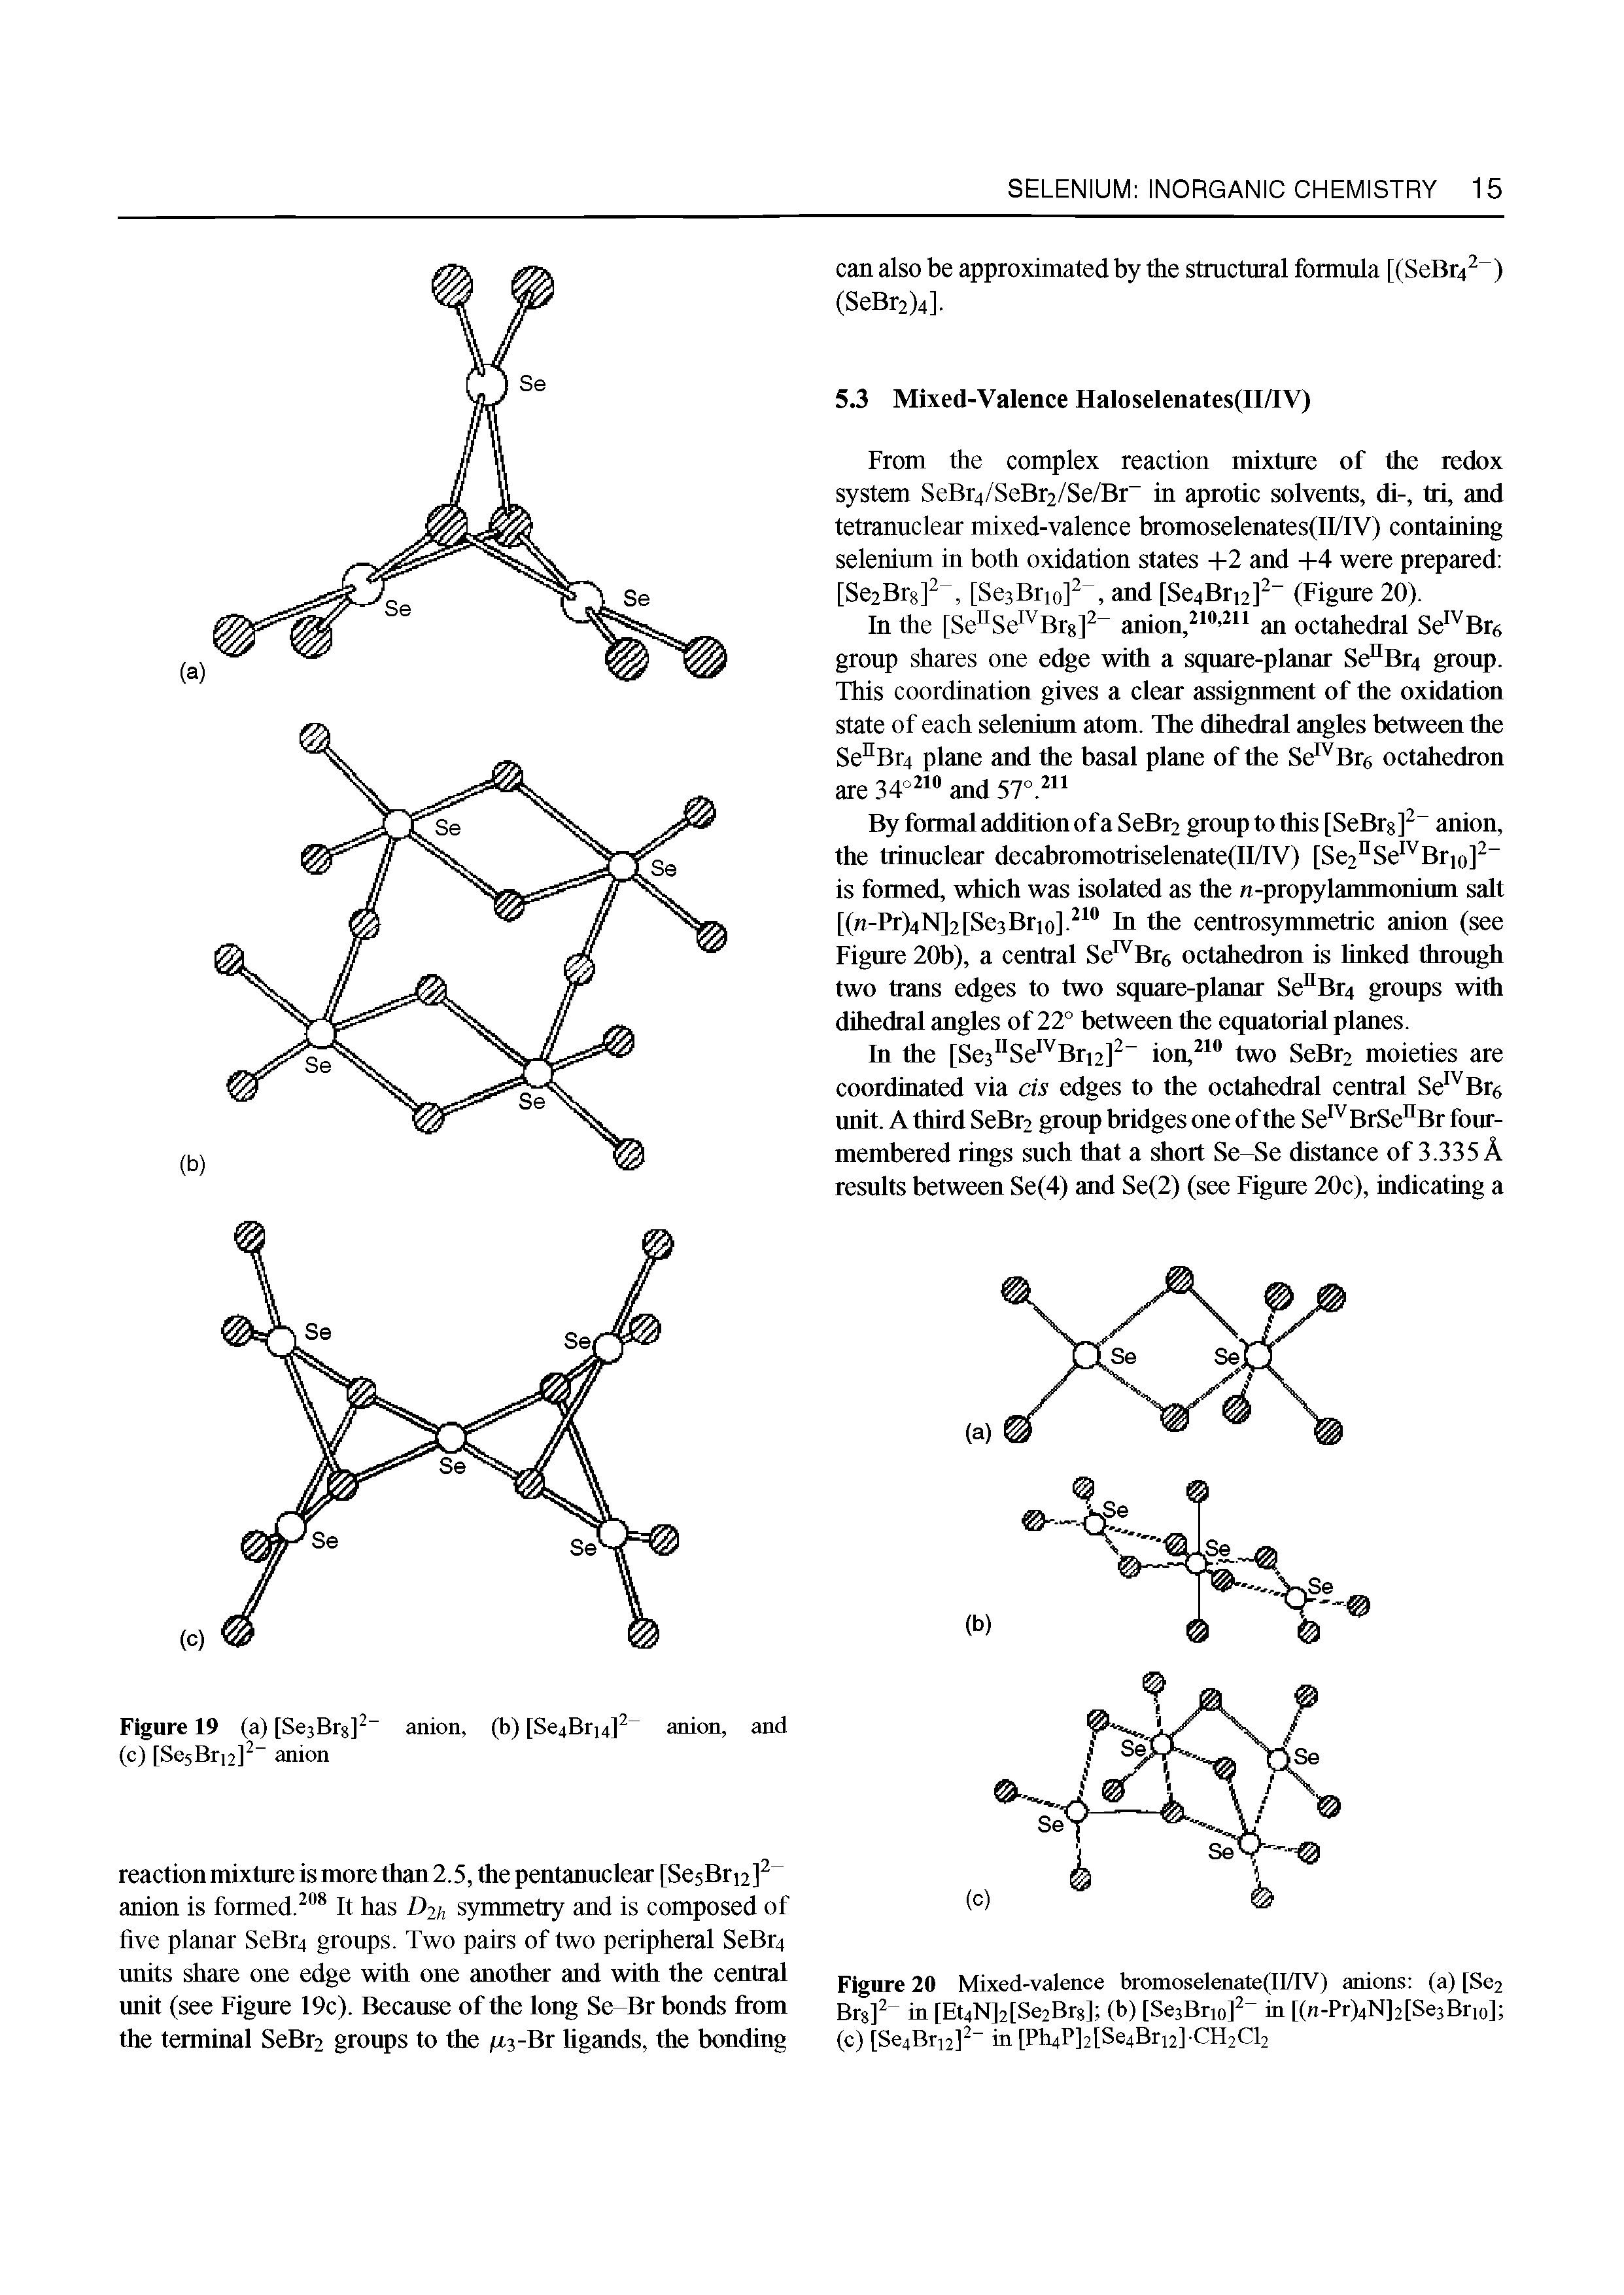 Figure 20 Mixed-valence bromoselenate(IFIV) anions (a) [Sc2 Brg] in [Et4N]2[Se2Brg] (b) [SesBrio] in [(n-Pr)4N]2[Se3Brio] (c) [Se4Bri2] in [Ph4P]2[Se4Bri2]-0112012...